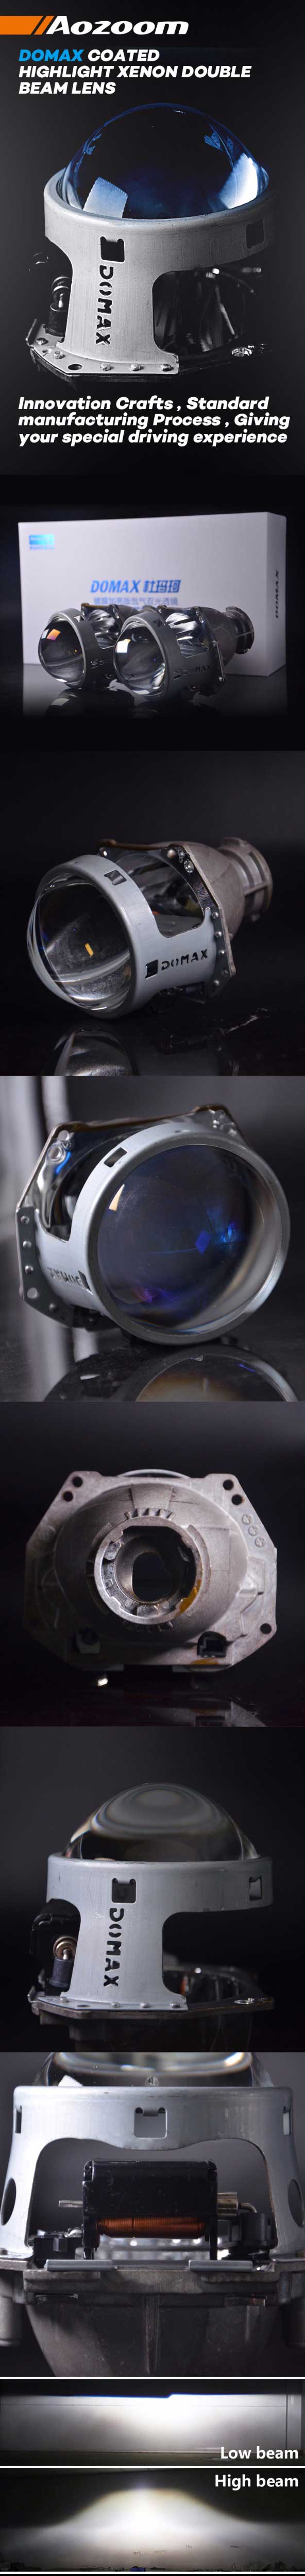 1 - Aozoom Domax High Brightness 3-Inch HID Bi-Xenon Projector Headlight Lens